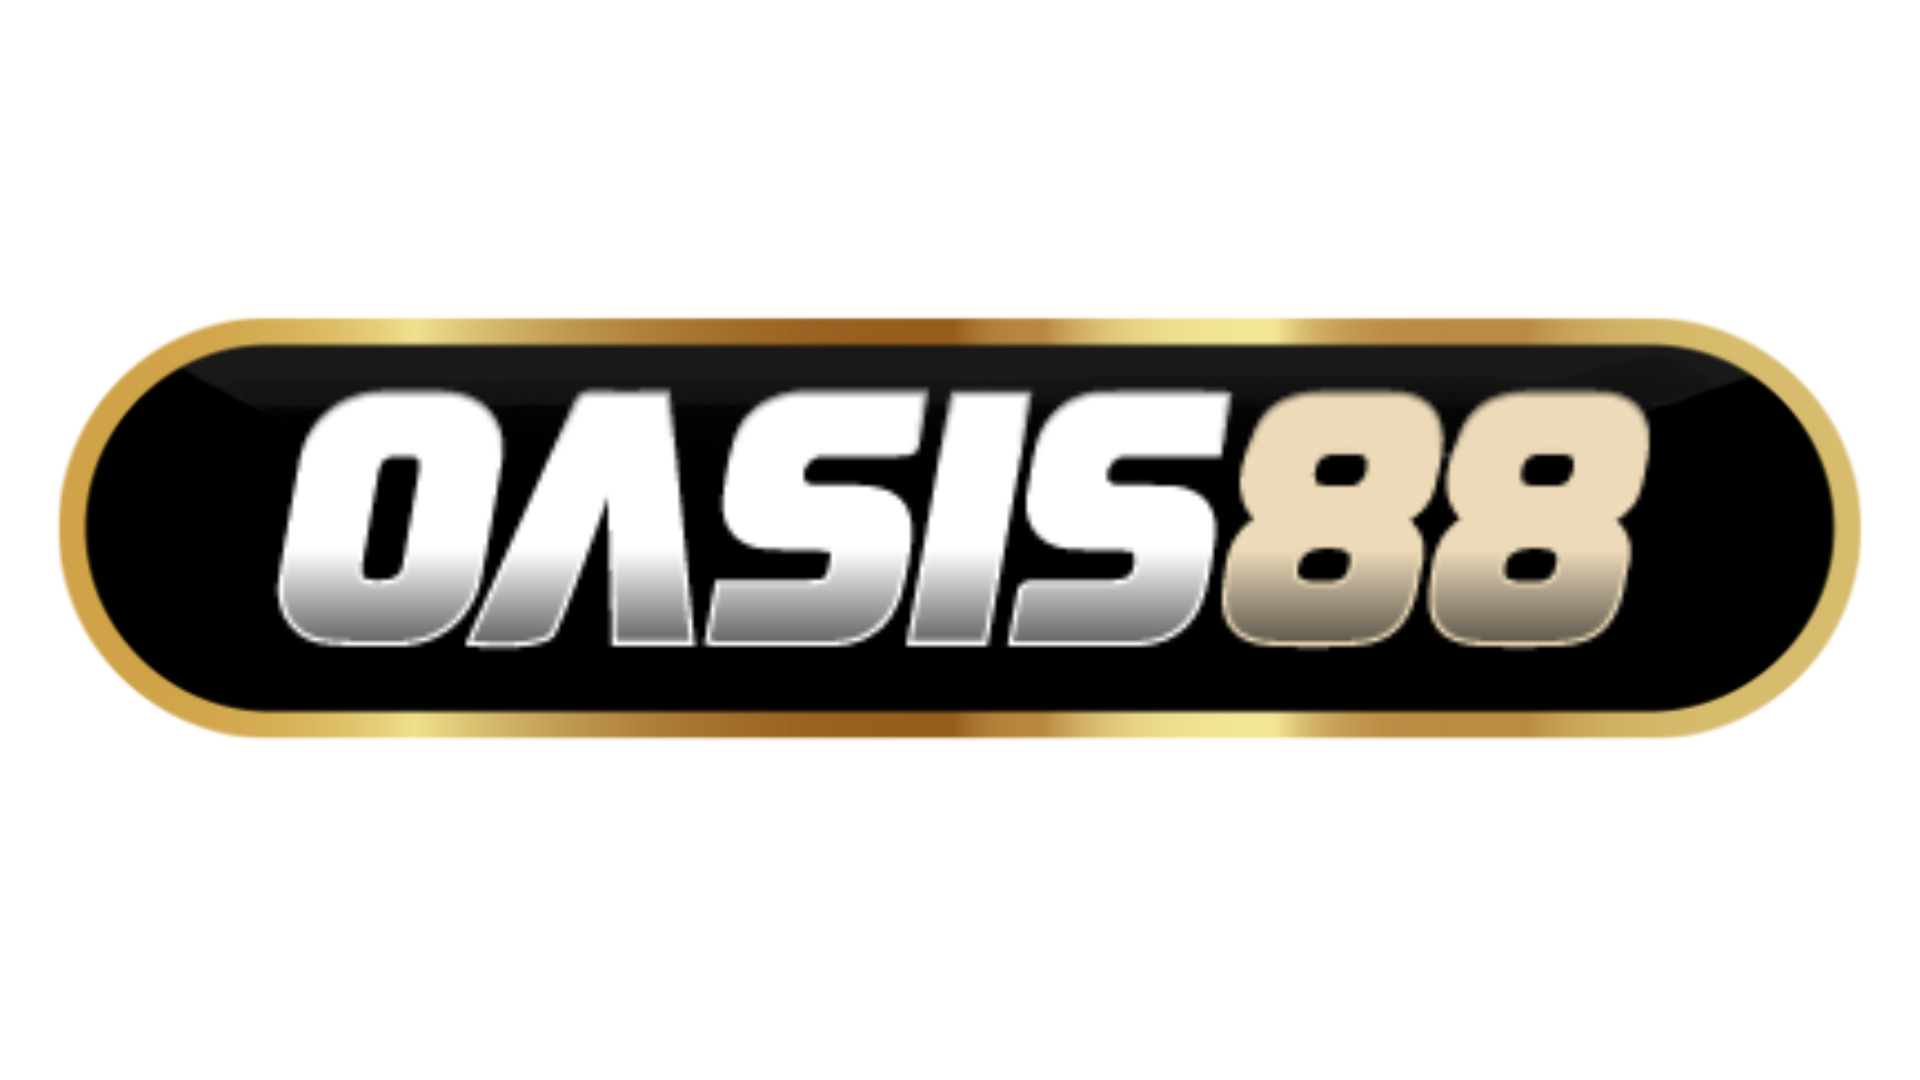 OASIS88